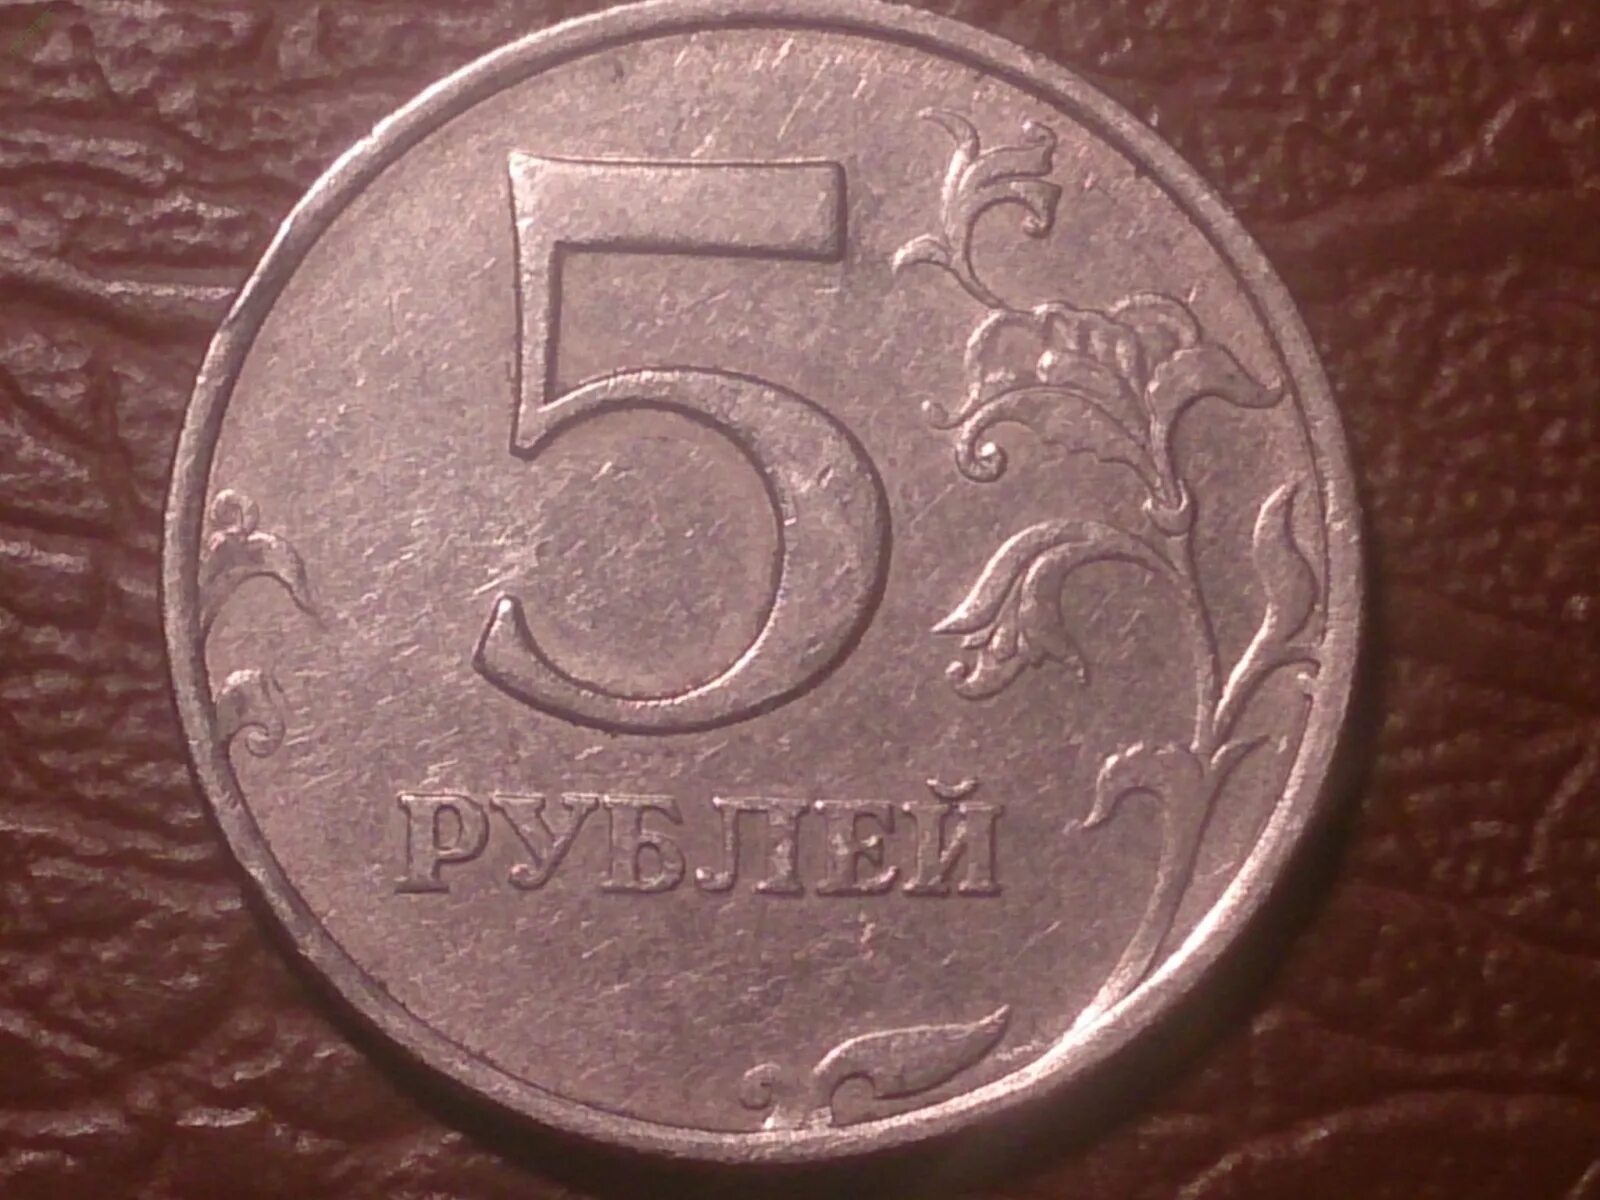 5 Рублей 1997 ММД СПМД. 5 Рублей 1997 ММД. 5 Рублей 1997 год Санкт Петербургский монетный двор. 5 Рублей 1997 СПМД.